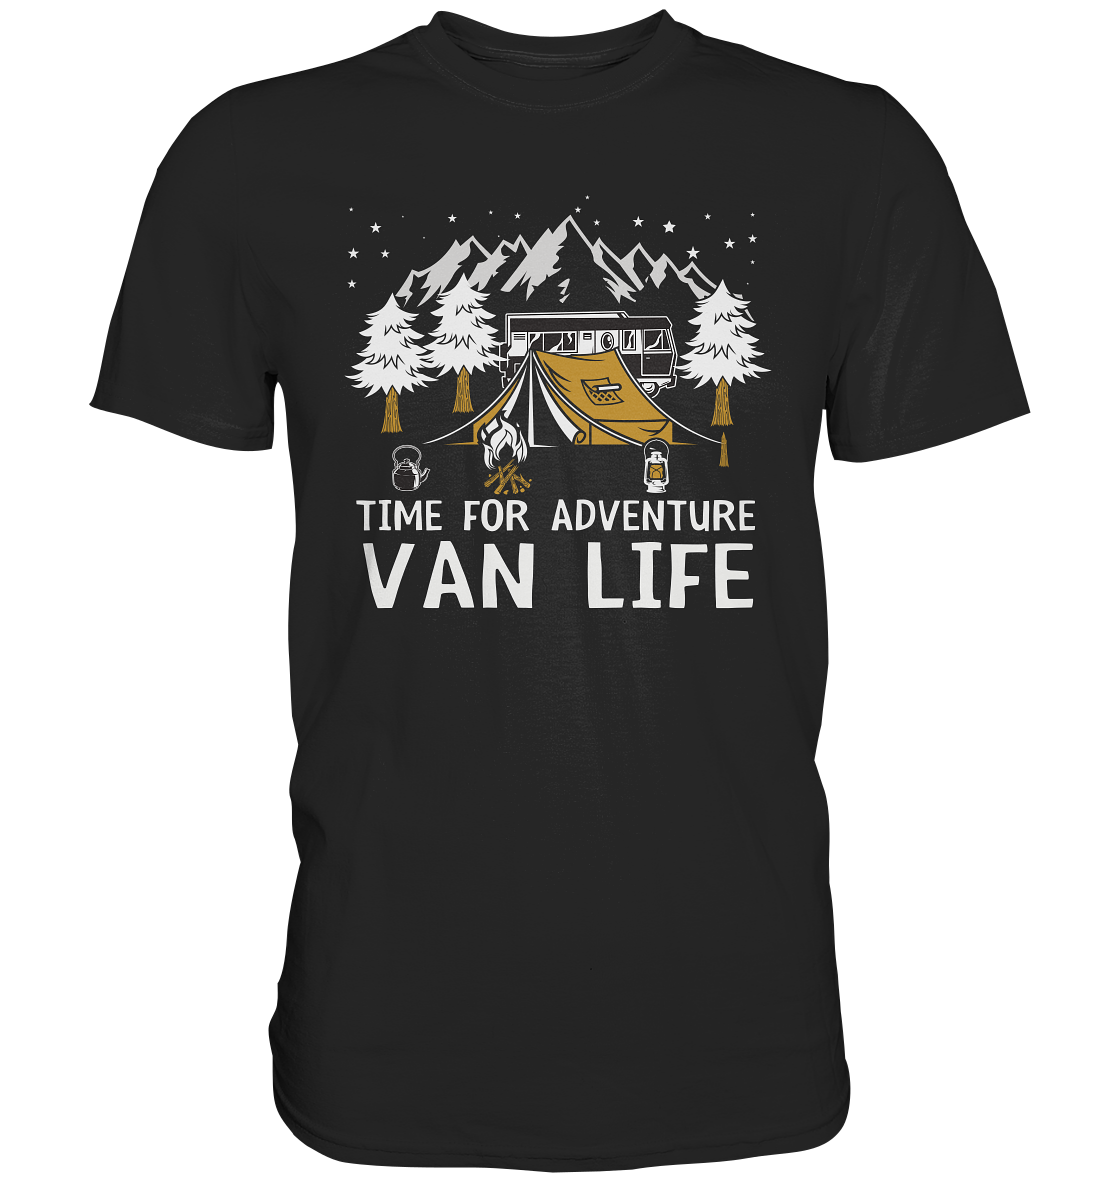 Time for Adventure. Van Life - Premium Shirt